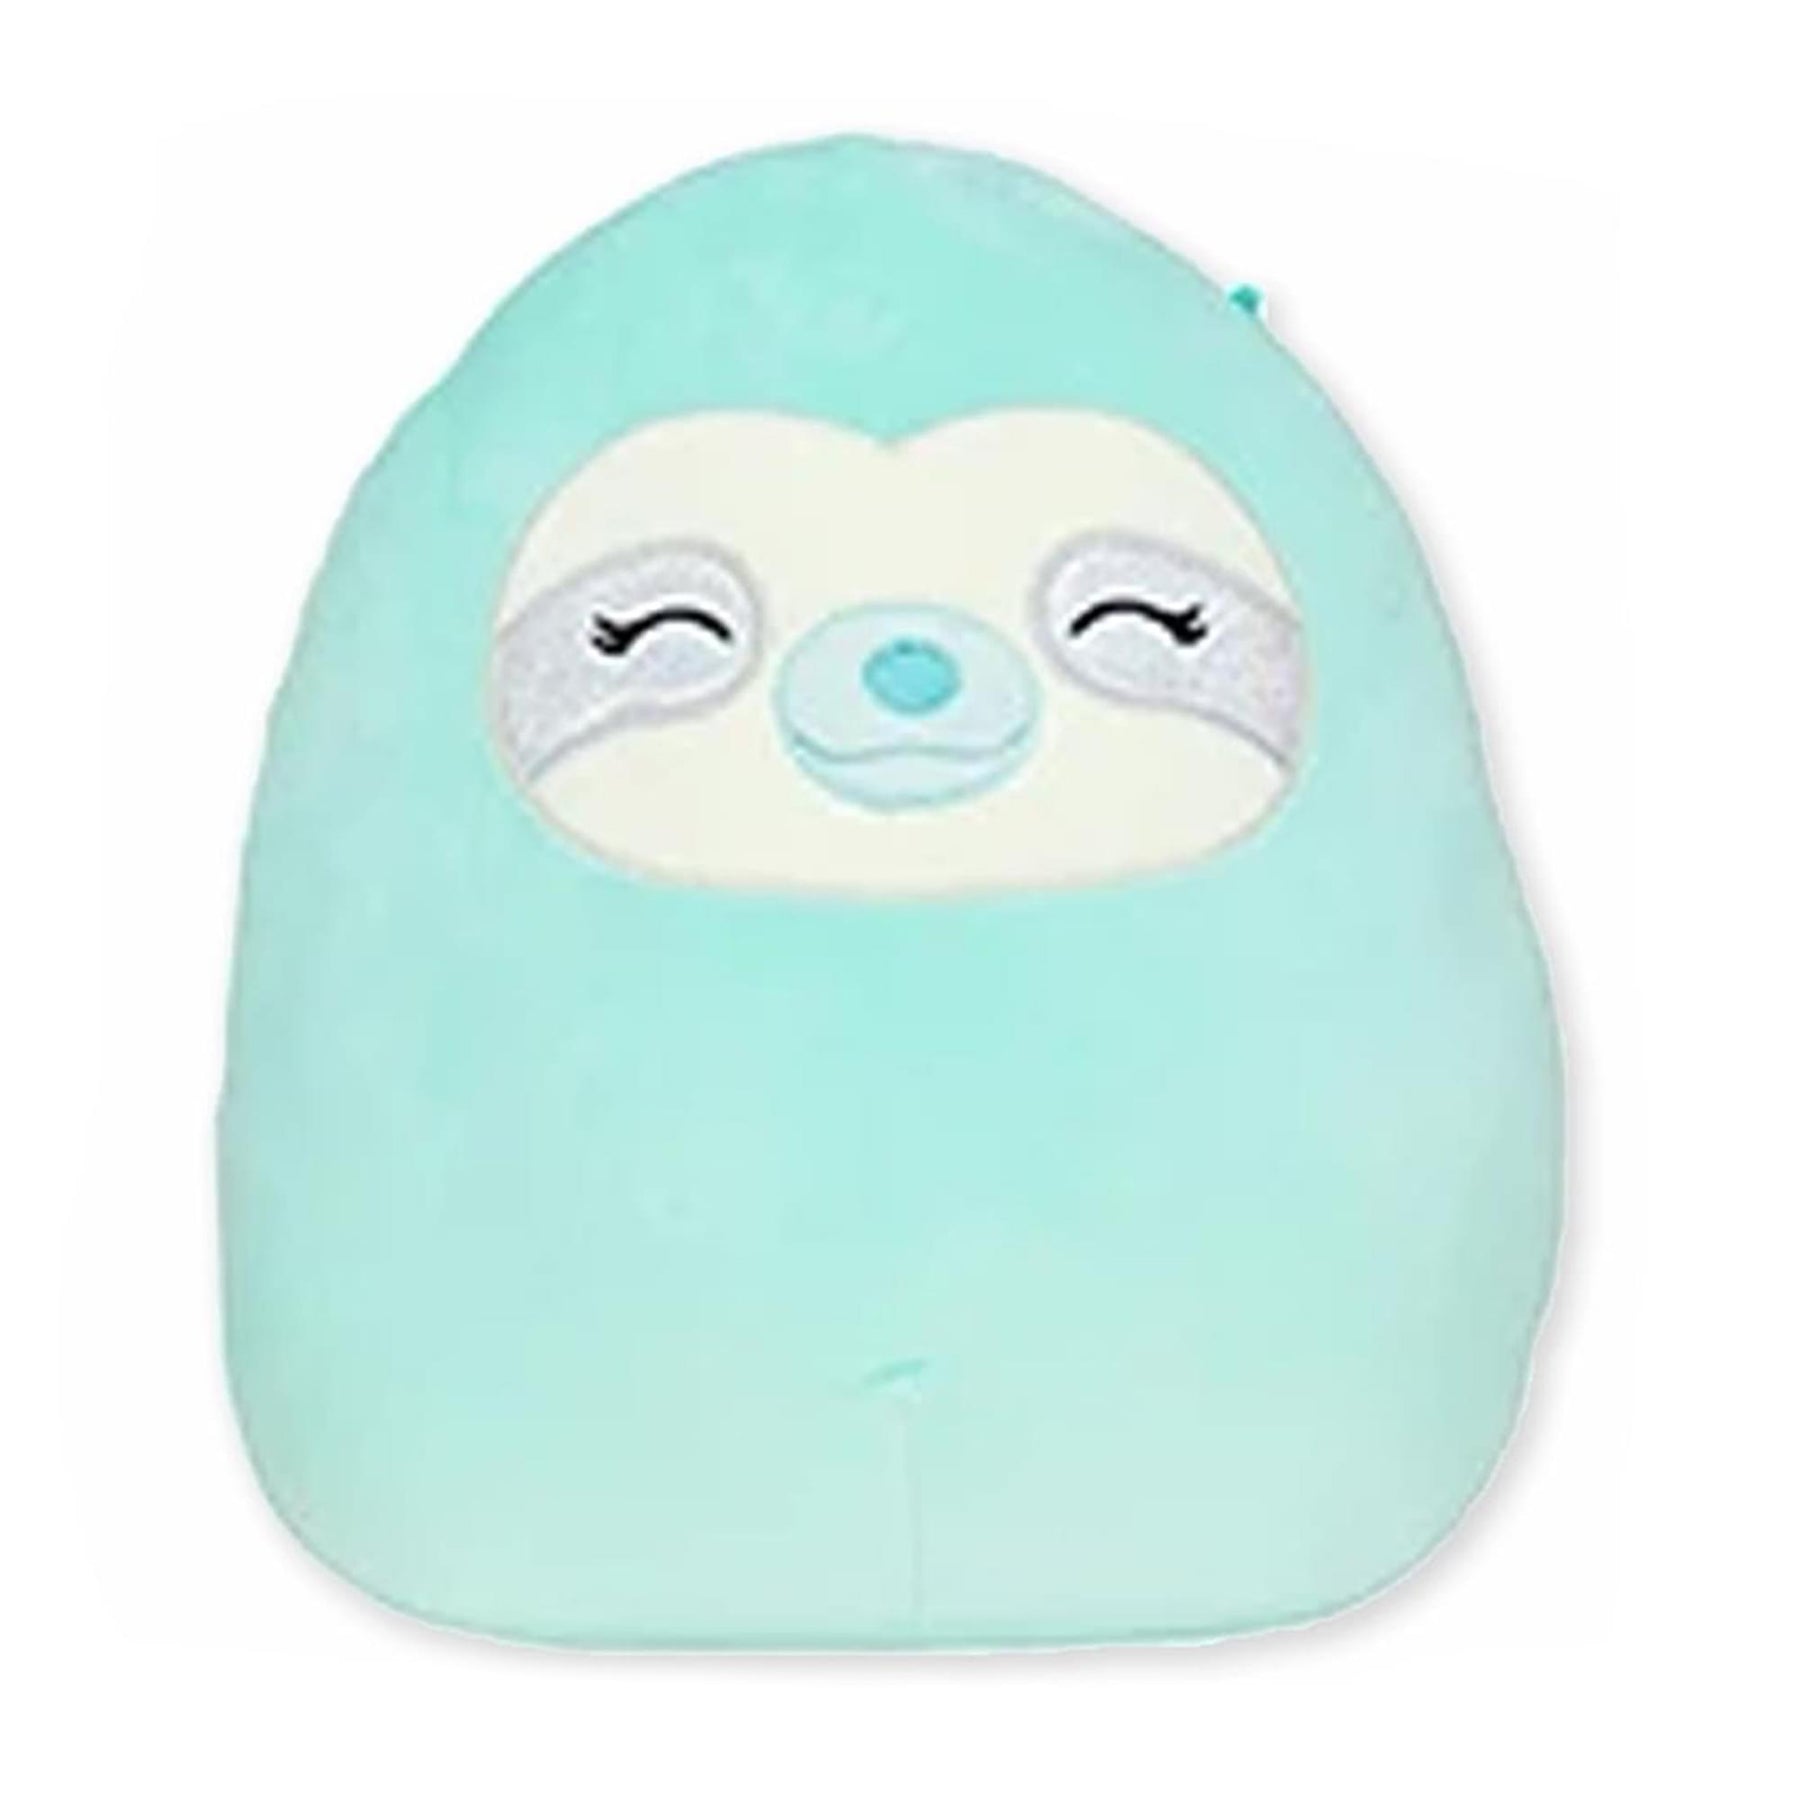 Squishmallow 12 Inch Plush | Aqua the Sleepy Eye Blue Sloth